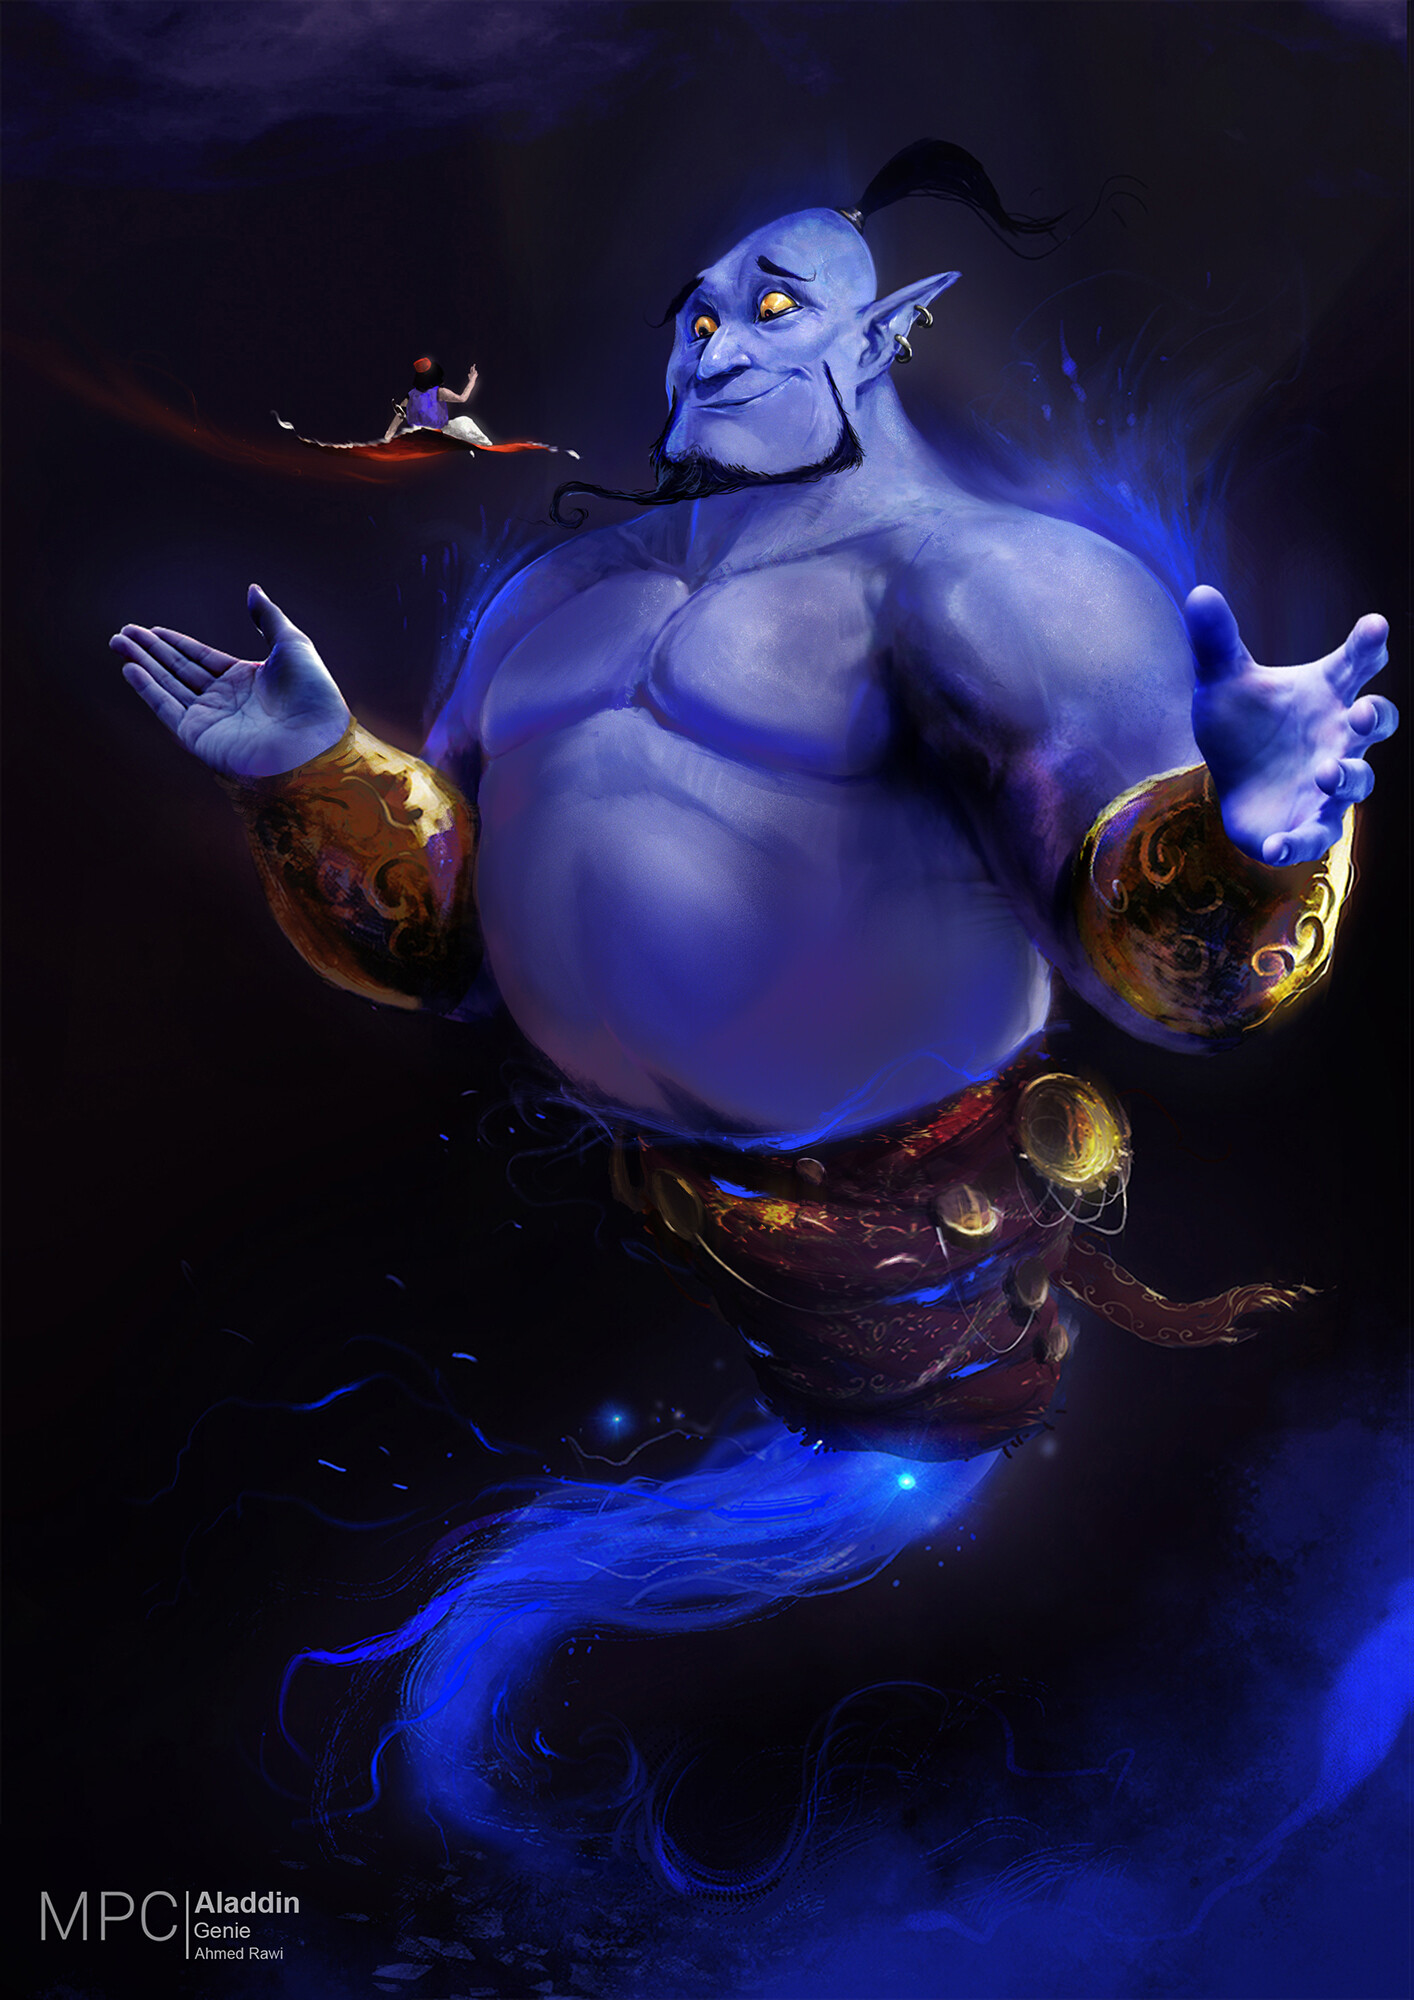 Victor el Bizarro - Genie. Aladdin fan art